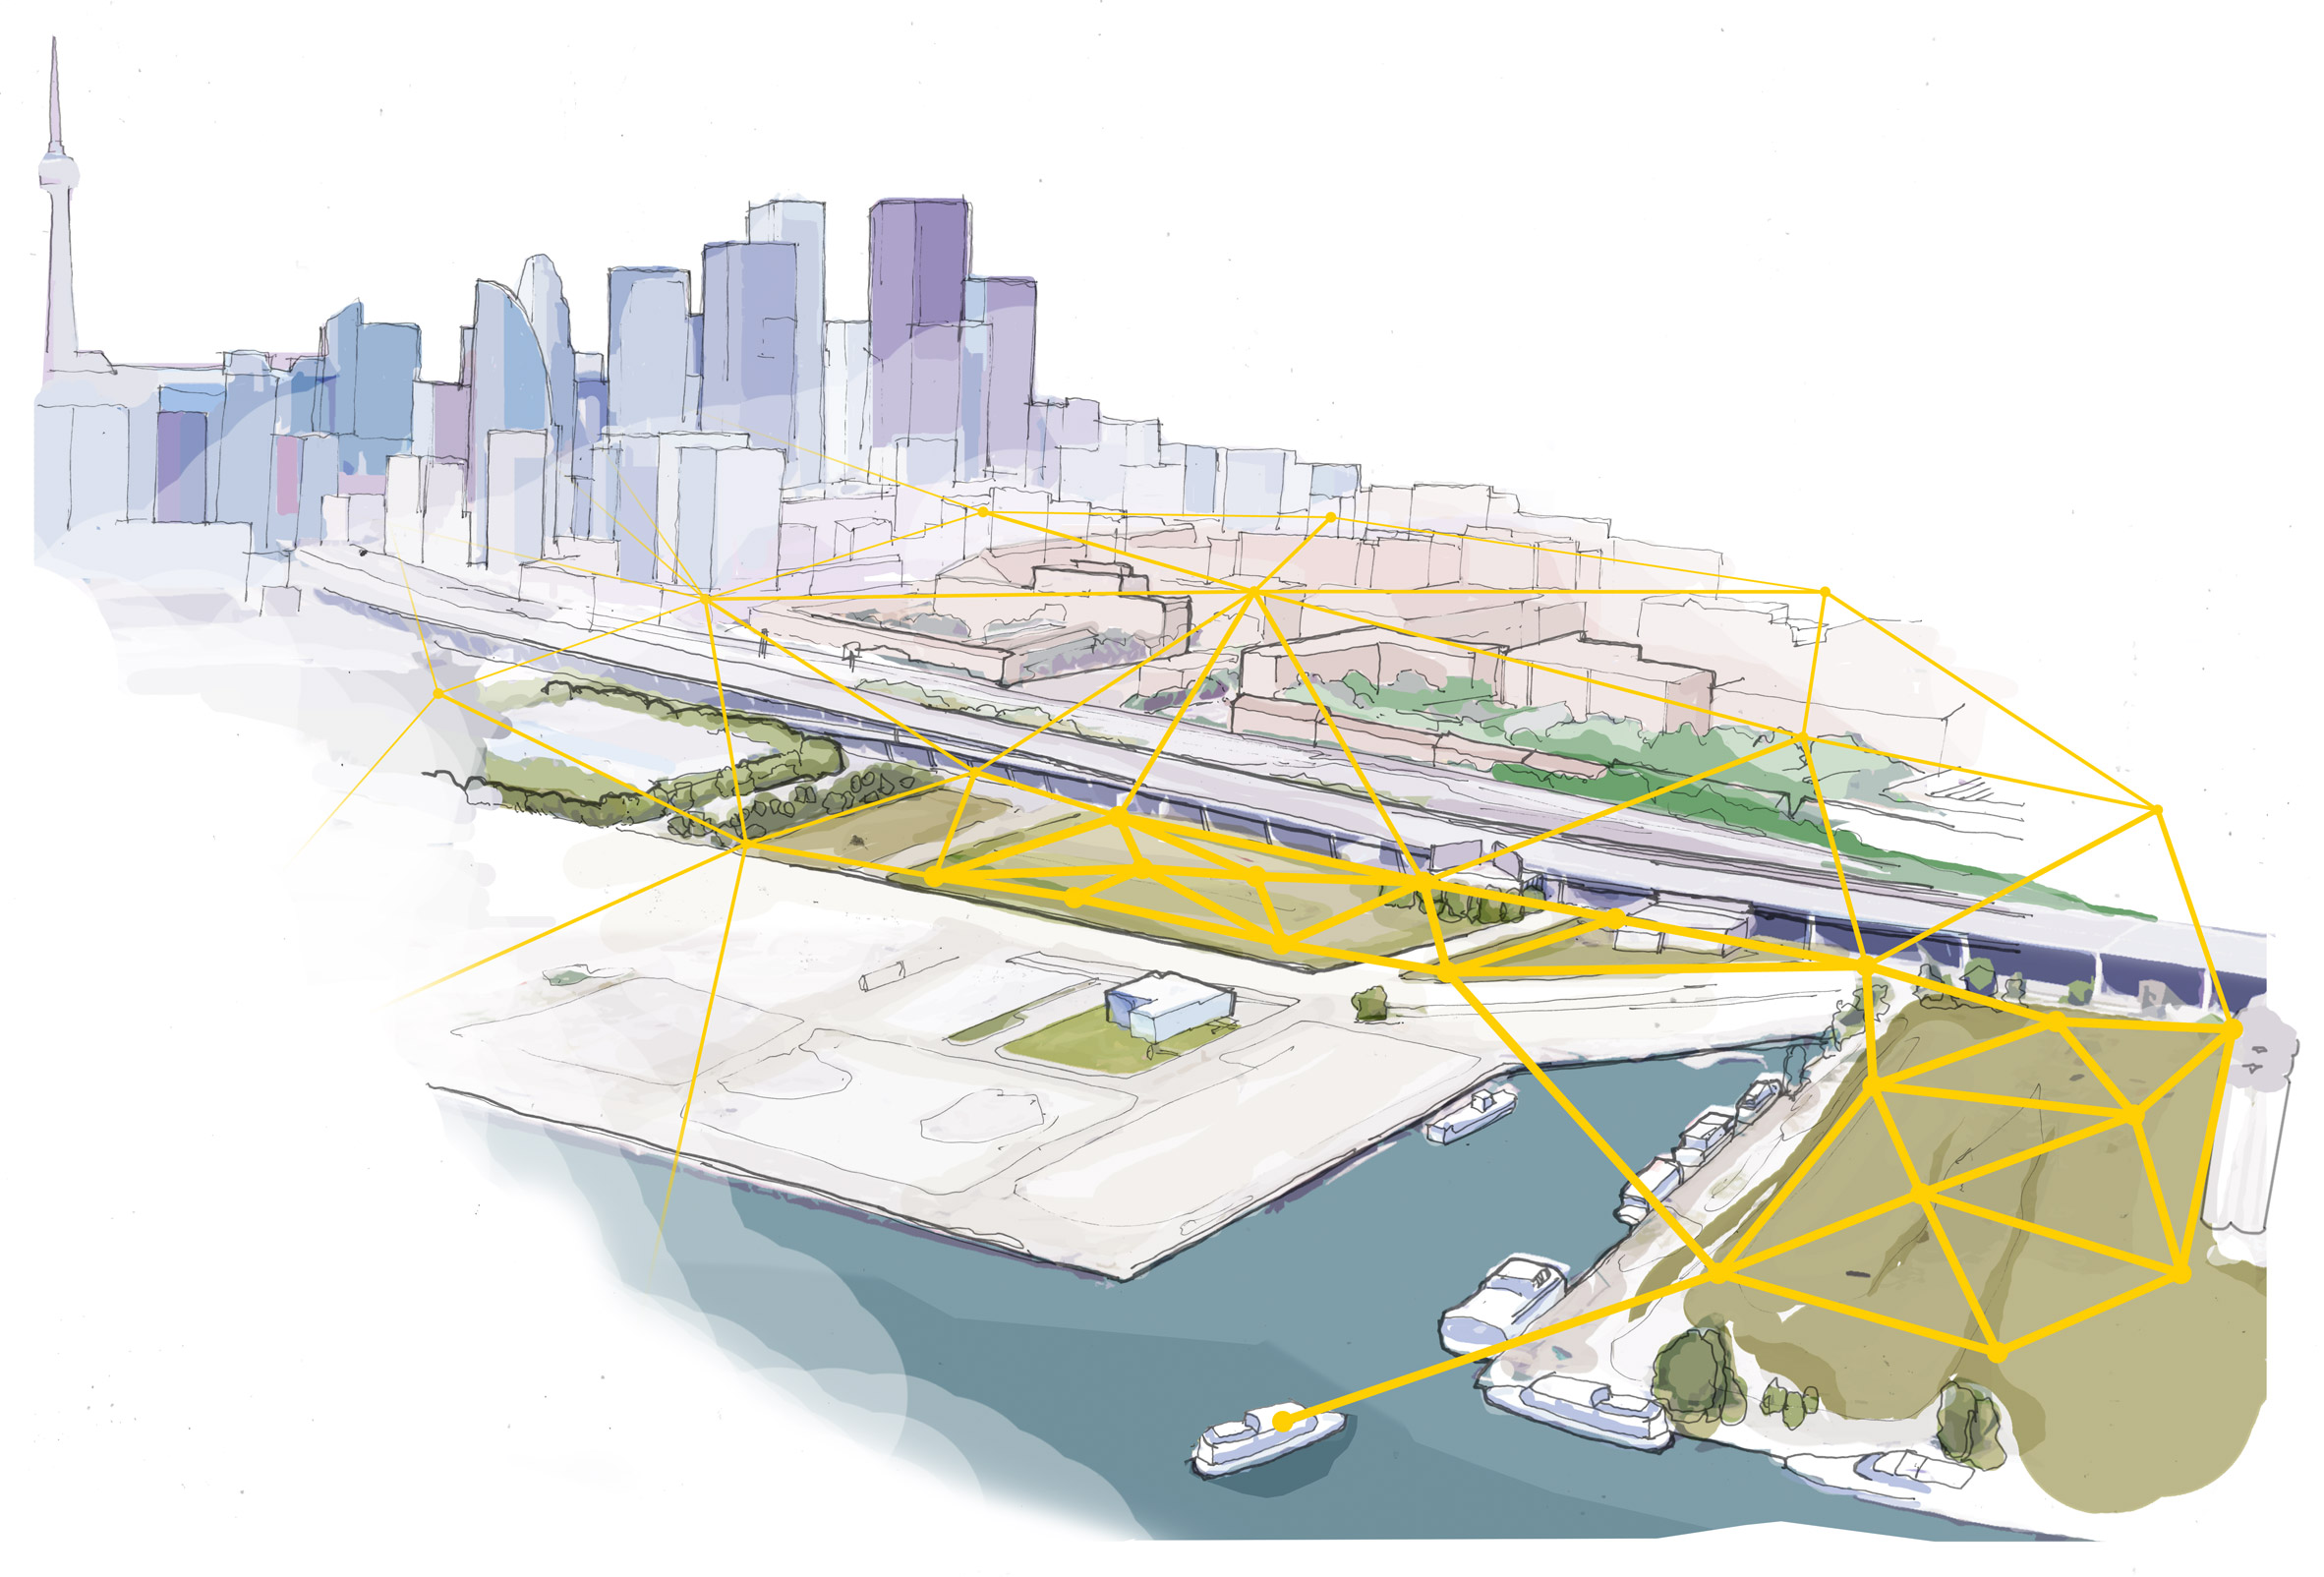 Alphabet's Sidewalk Labs to create high-tech "future city" on Toronto waterfront